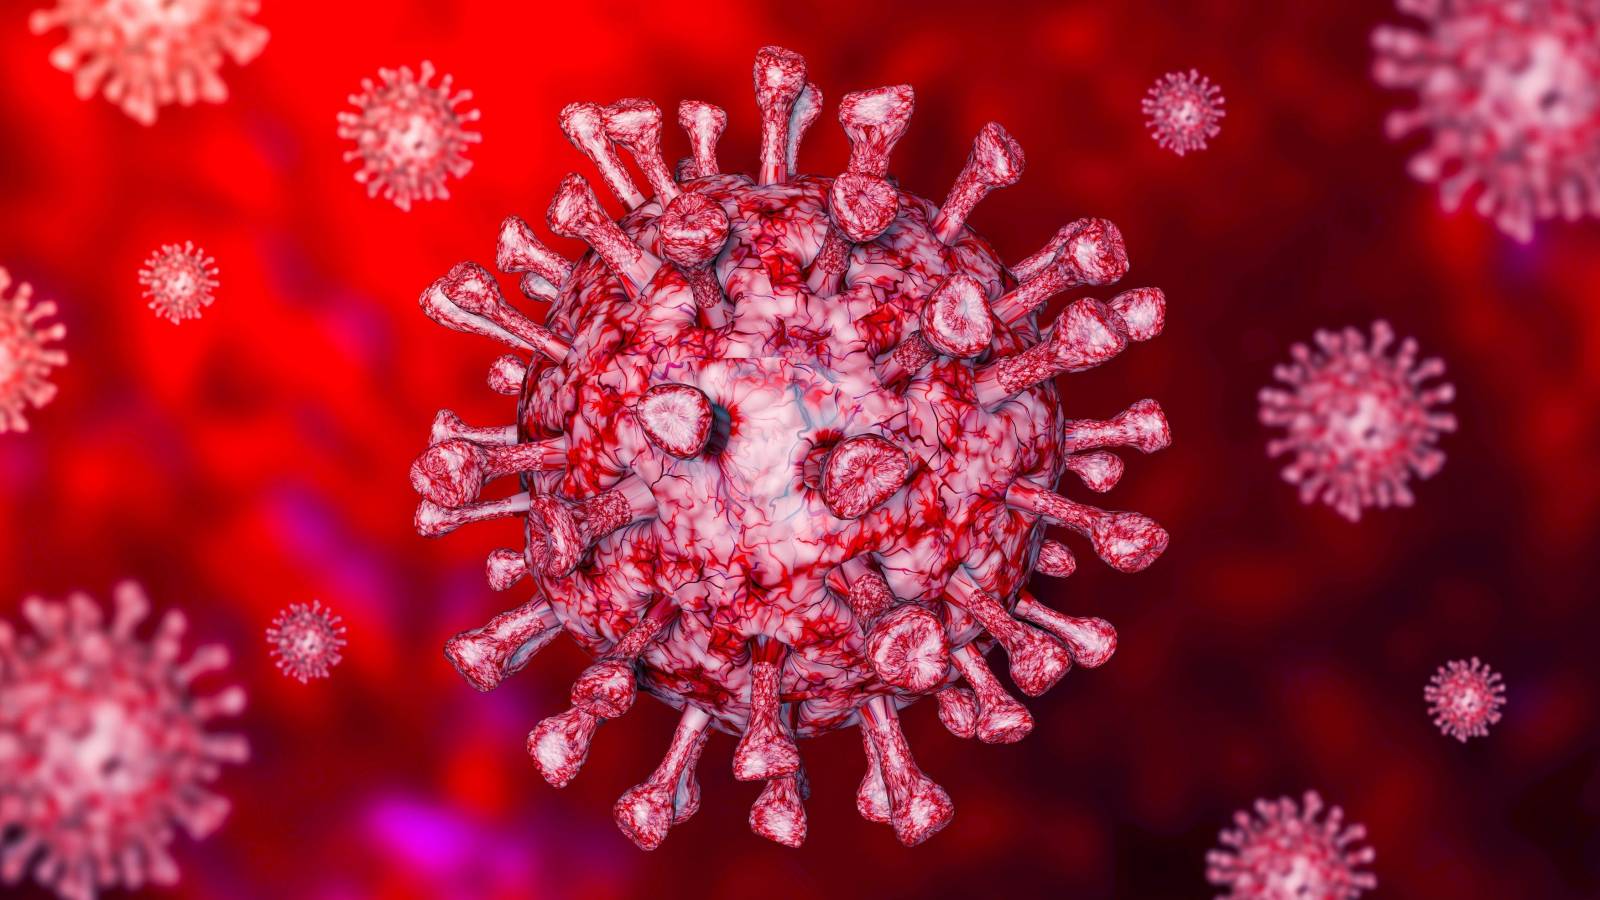 Coronavirus Romania New Official Cases Announced on April 29, 2021